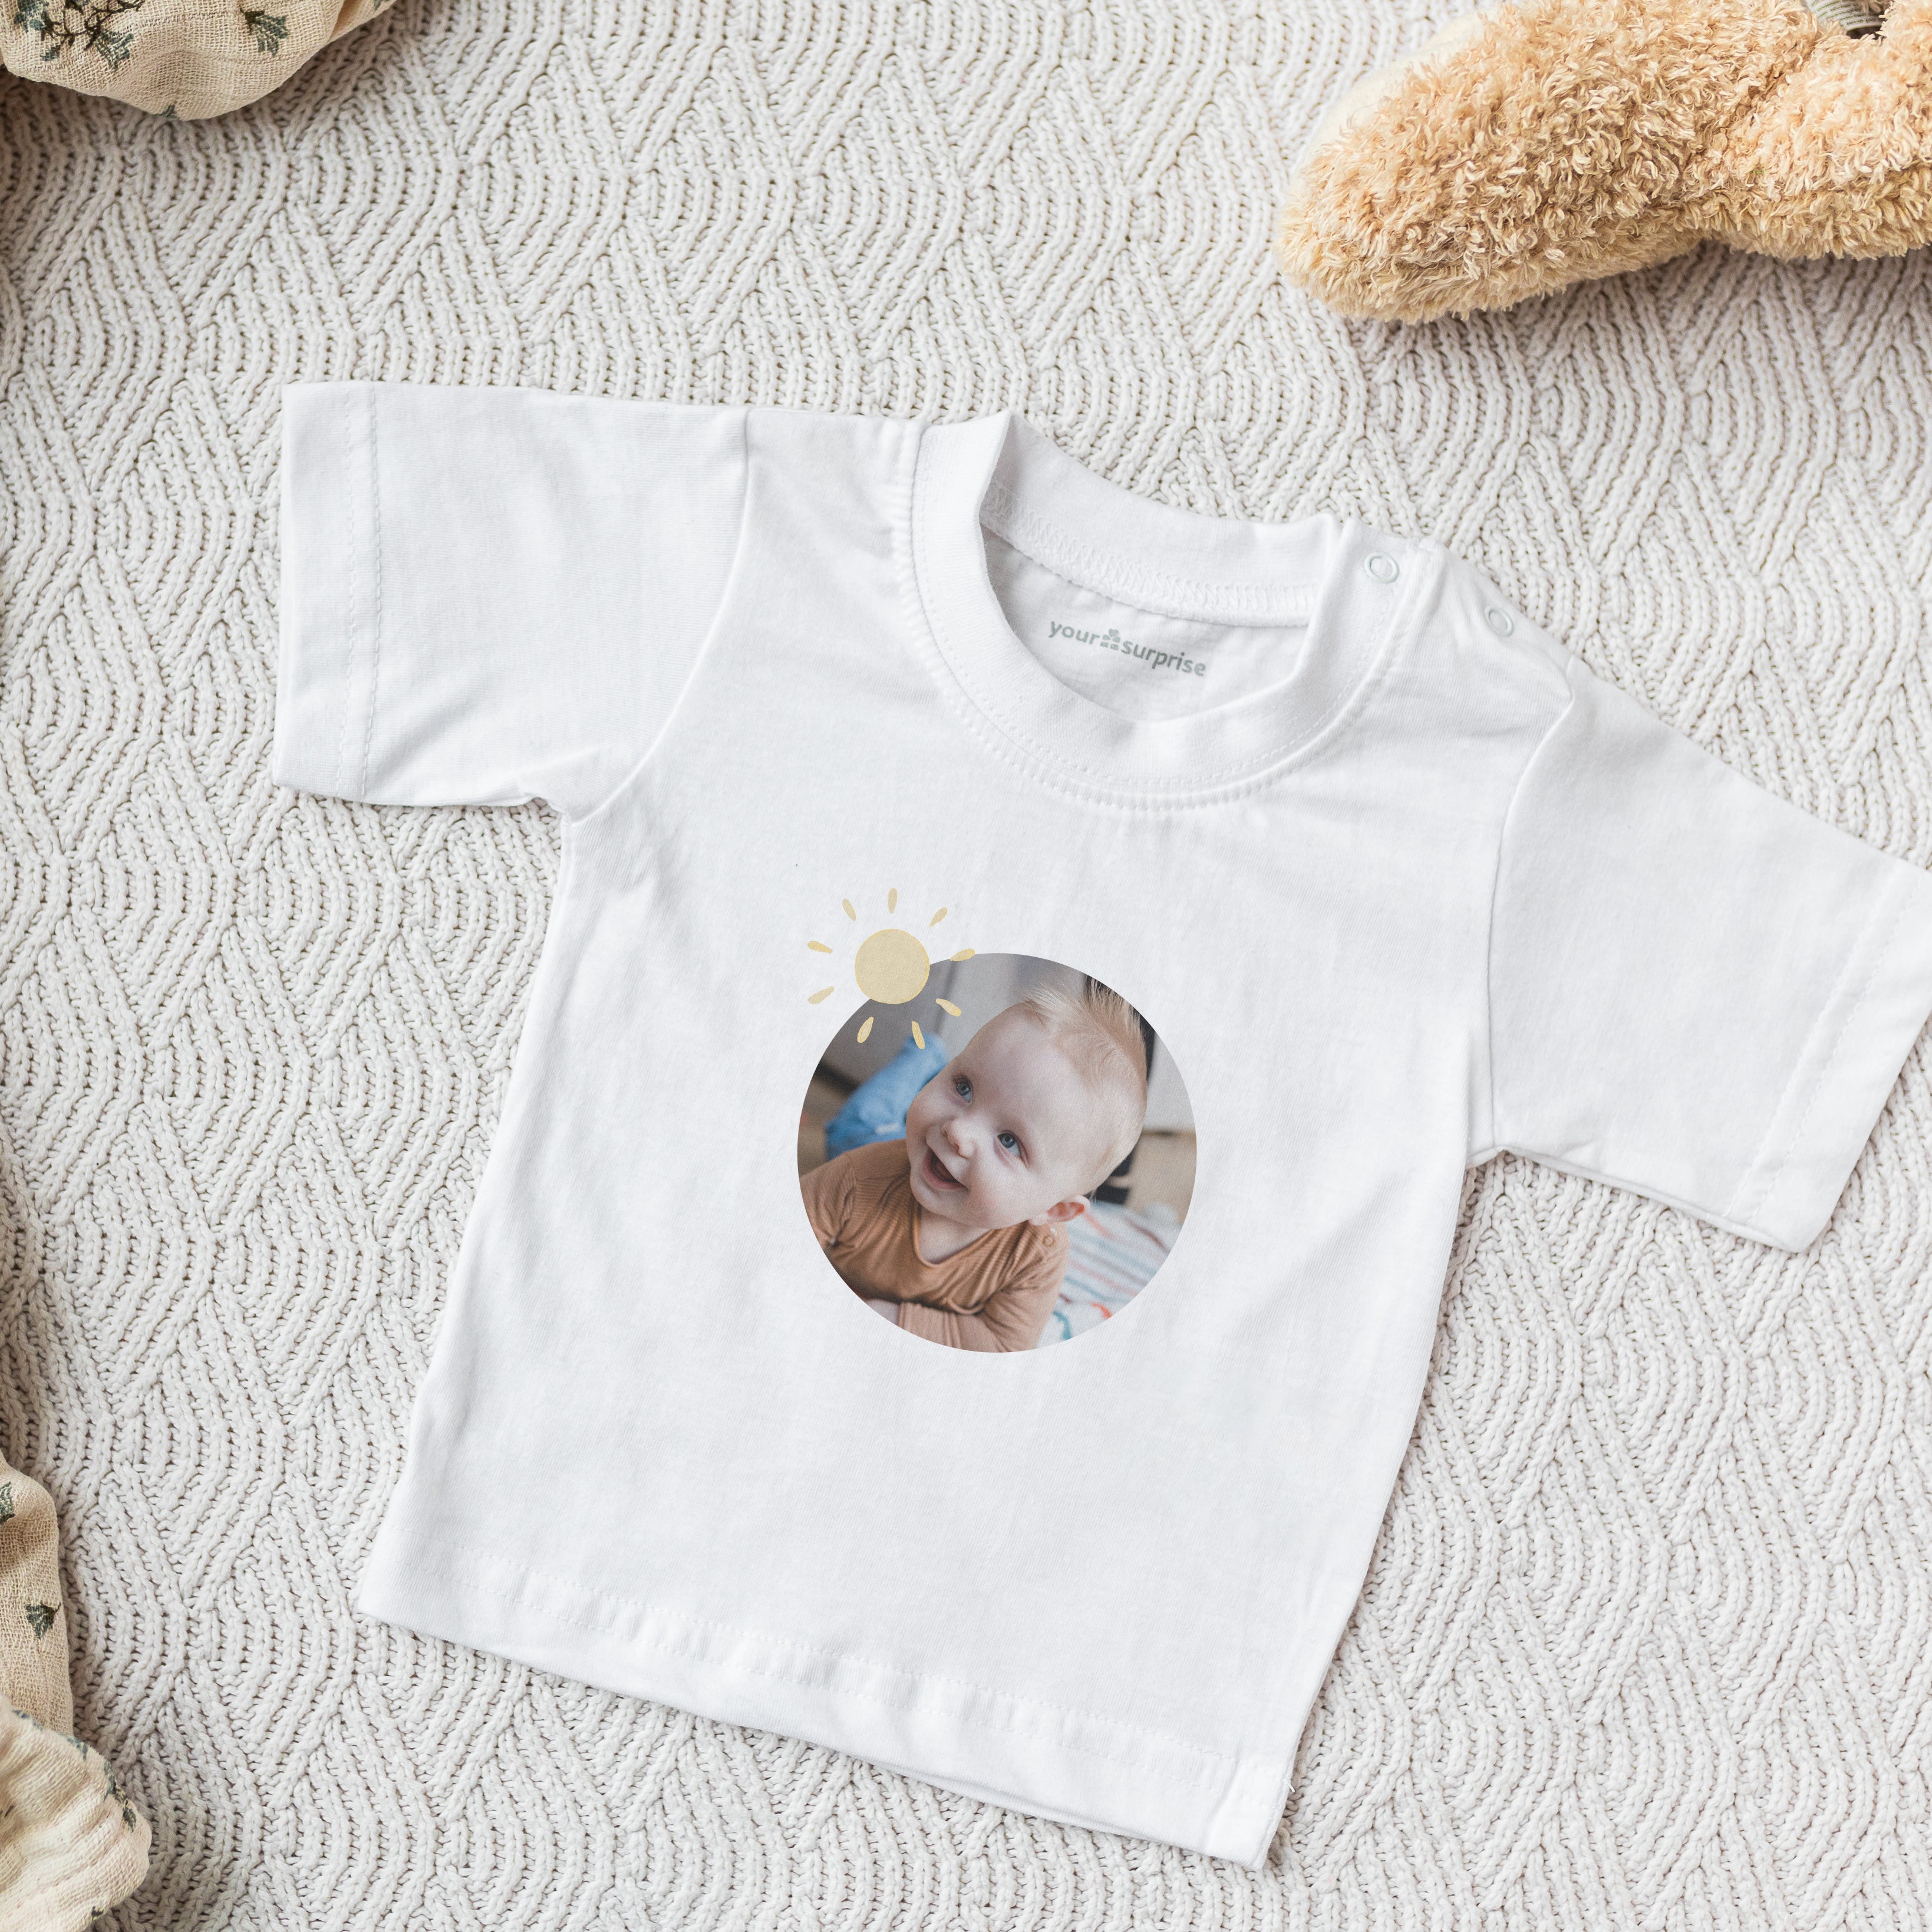 Personalised Baby T-shirt - Short sleeve - White - 74/80